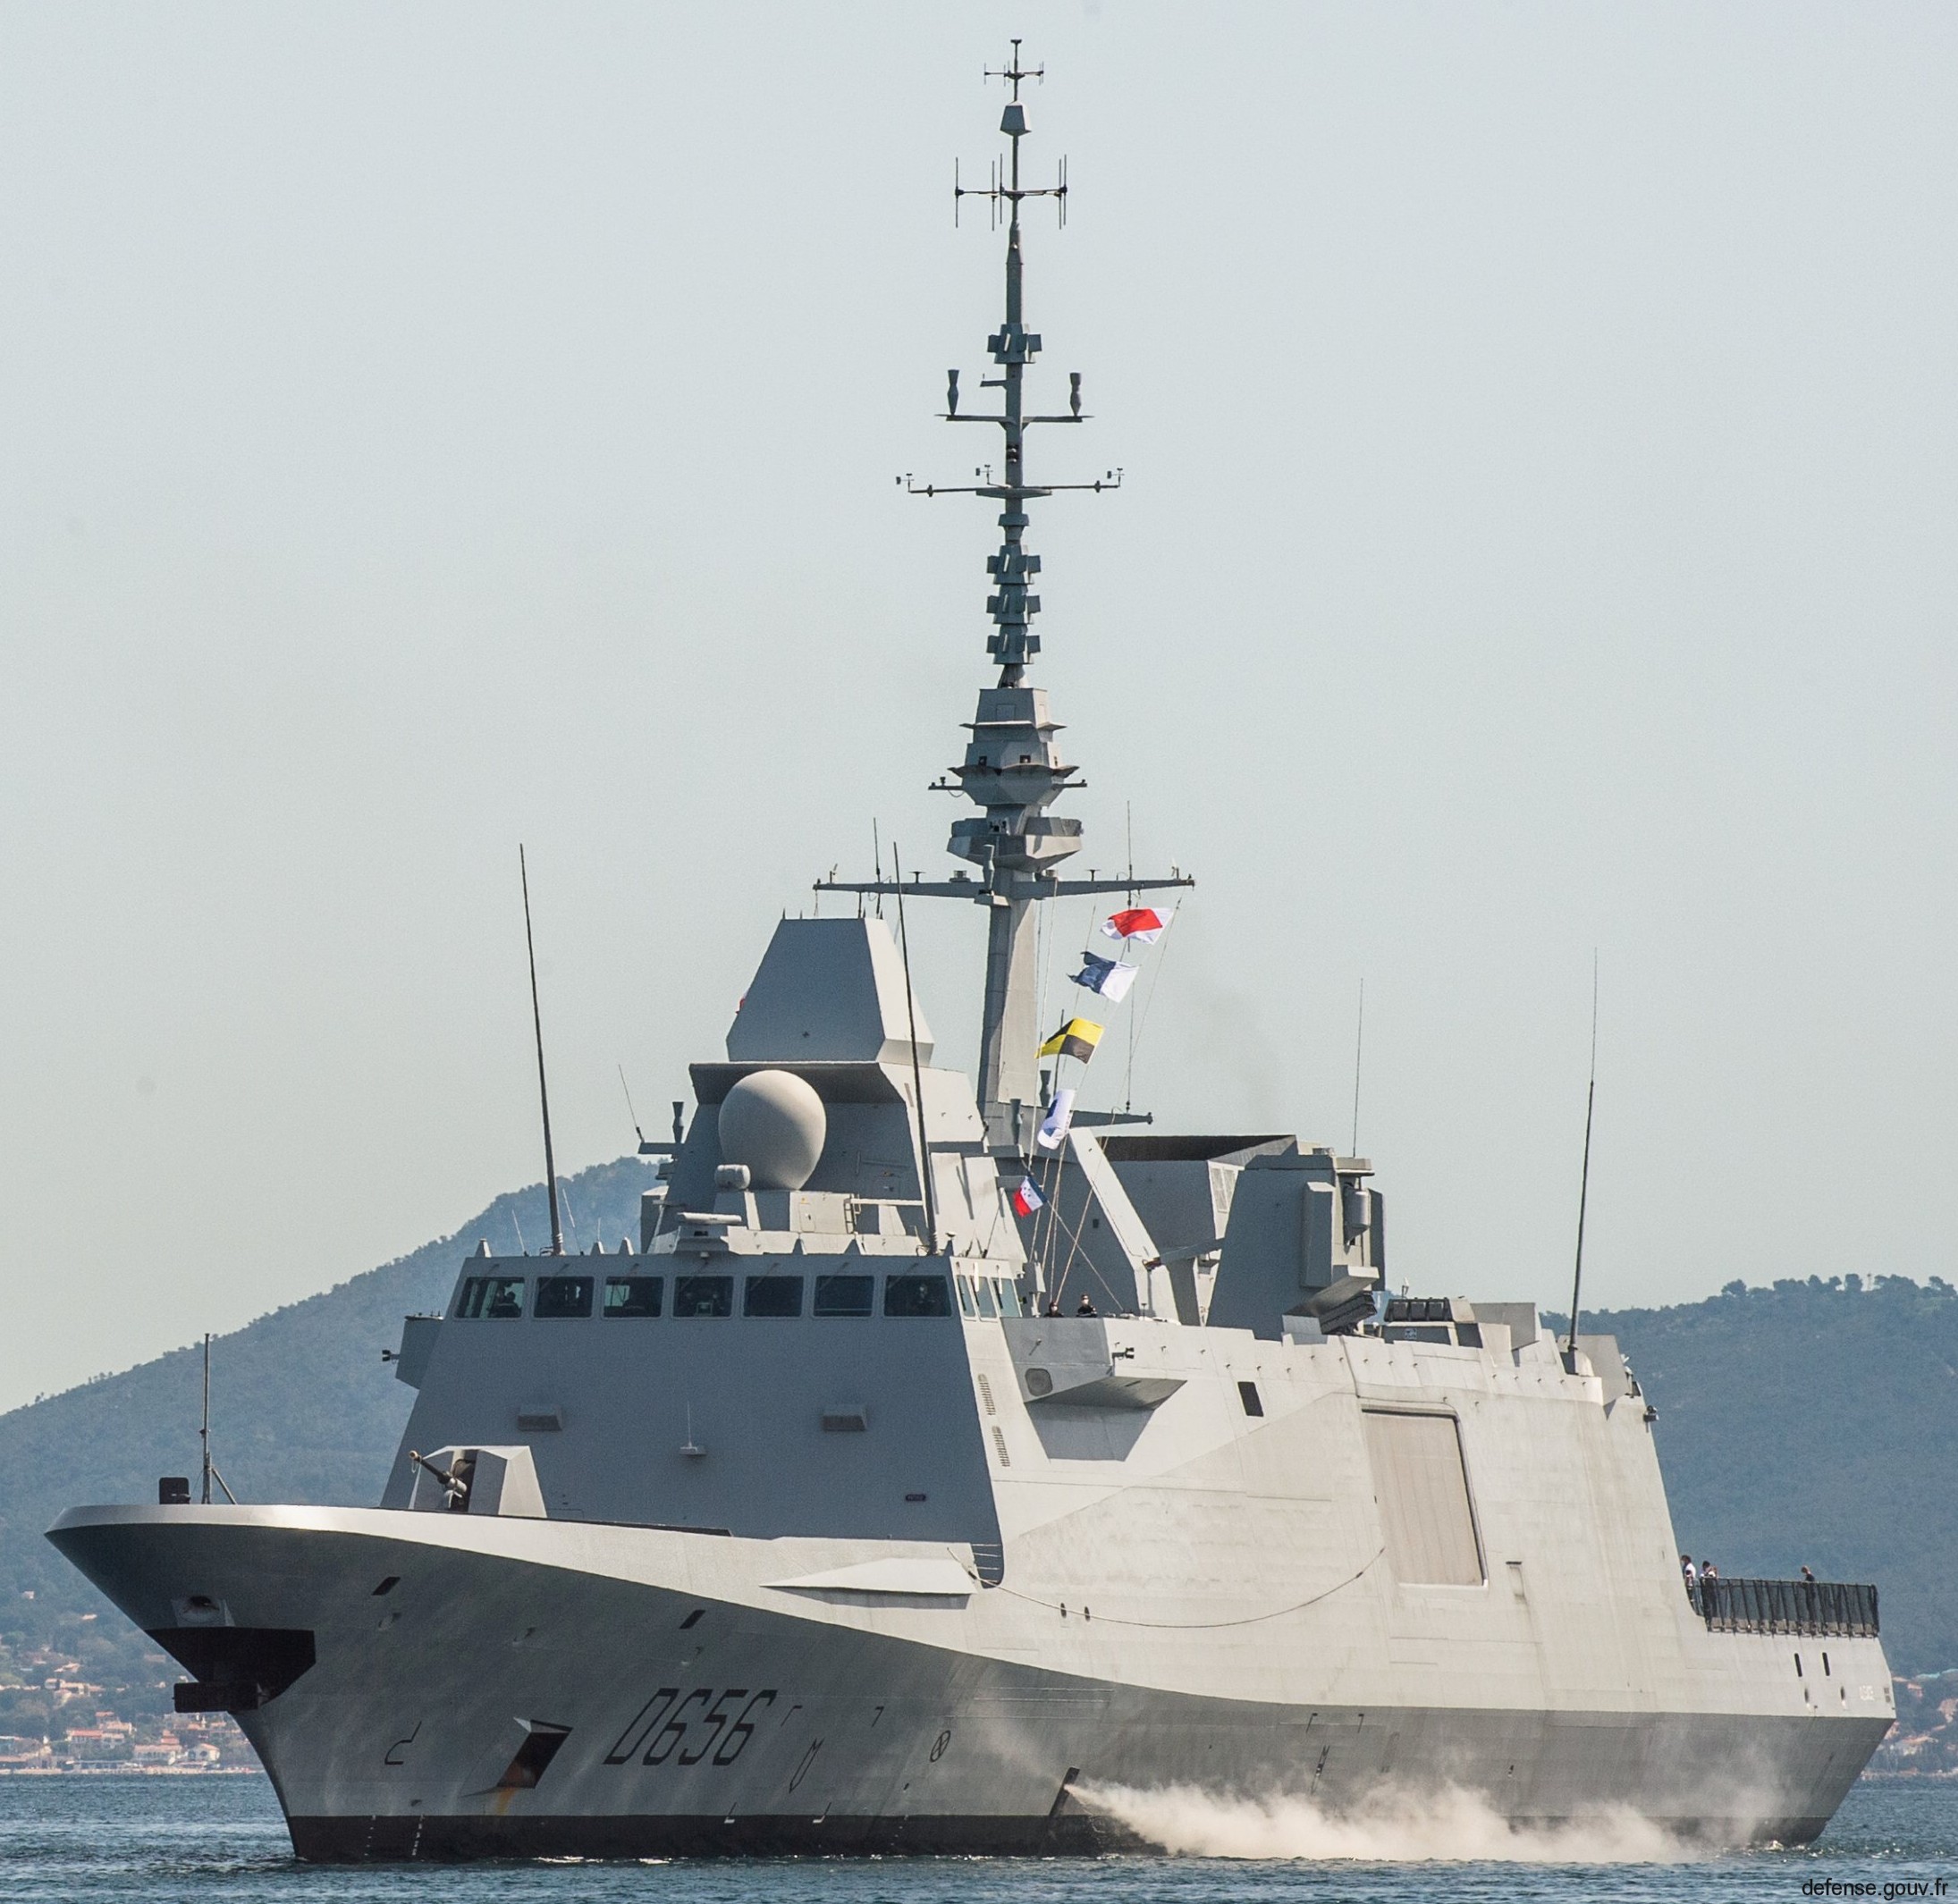 d-656 fs alsace fremm aquitaine class frigate fregate multi purpose french navy marine nationale 09